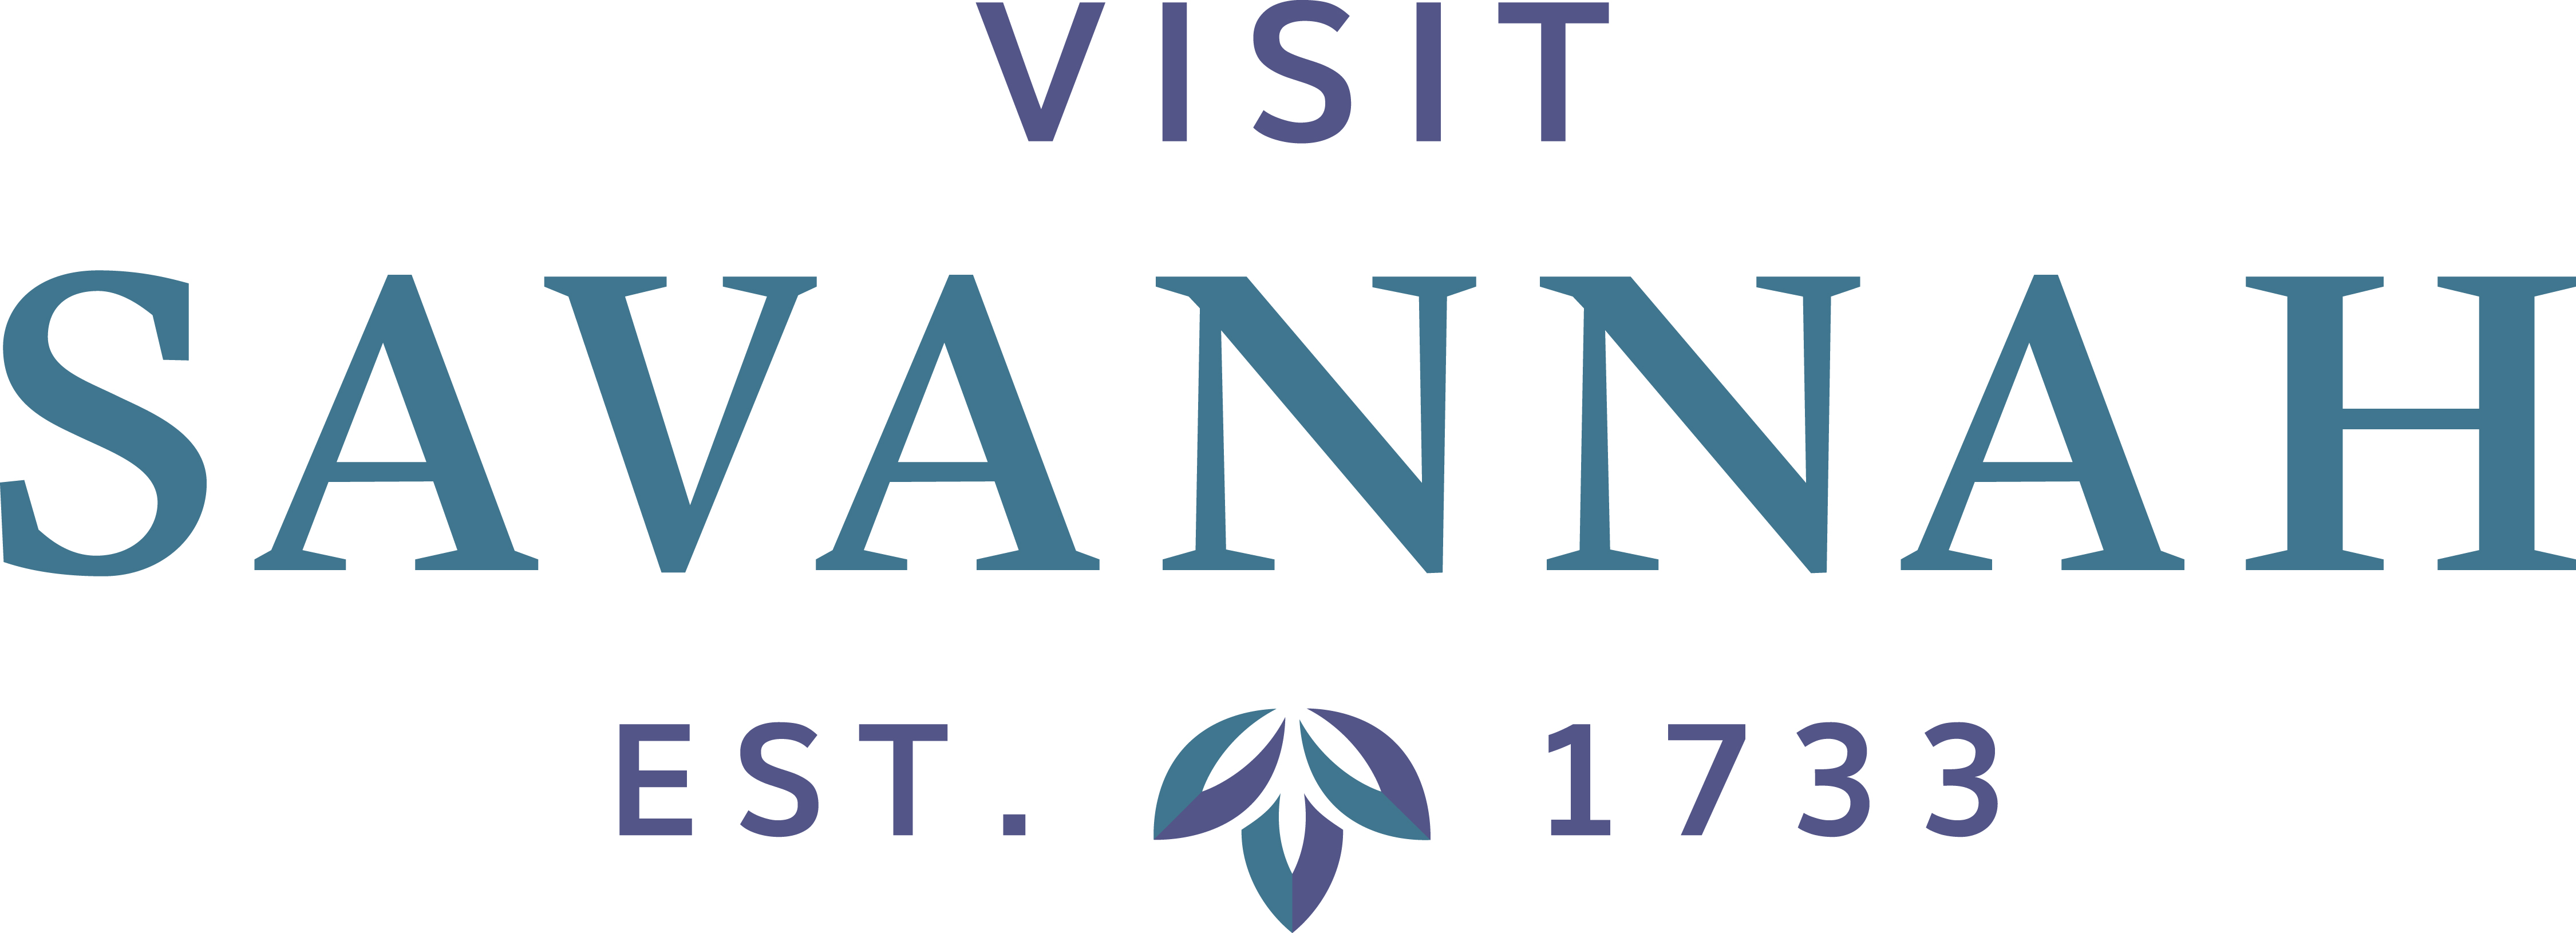 Savannah Convention and Visitors Bureau logo